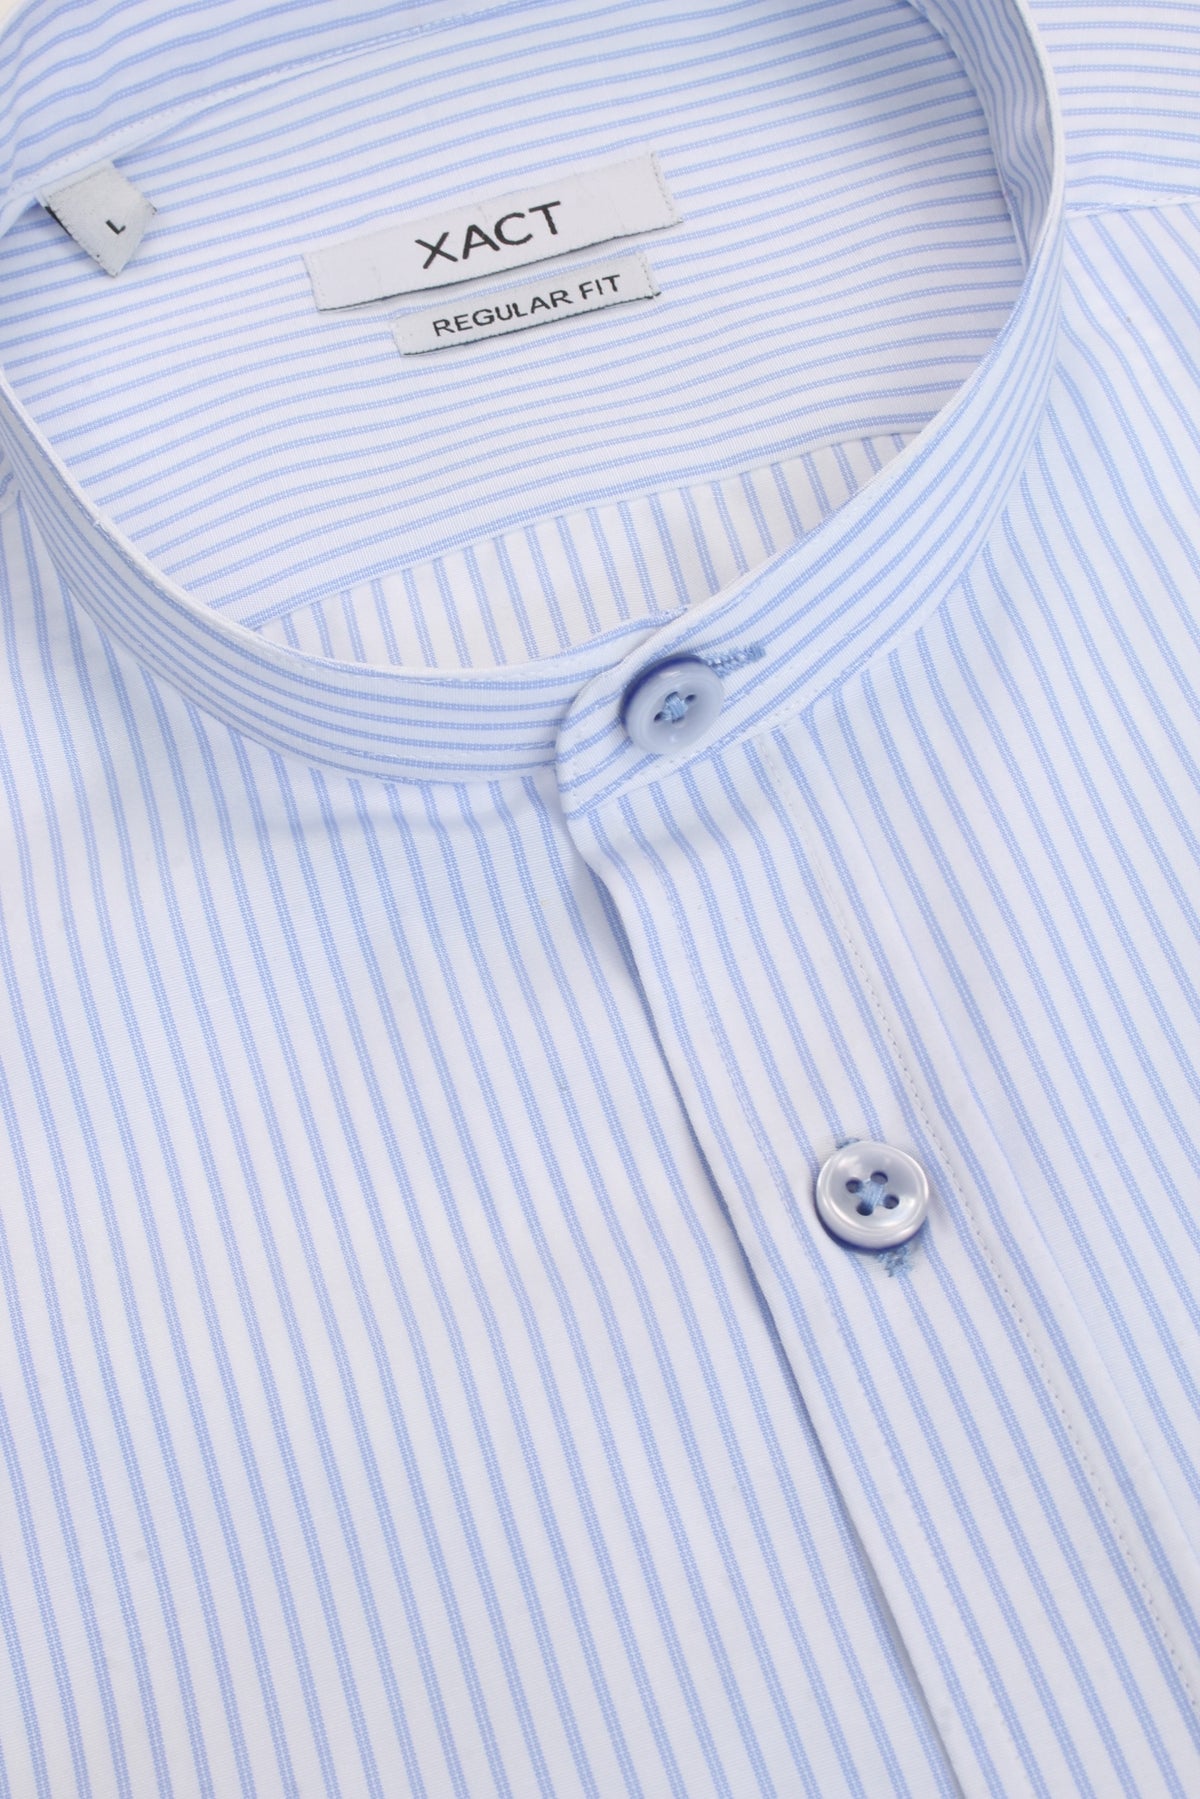 Xact Mens Stripe Grandad Shirt - Long Sleeved, 04, Xsh1078, Light Blue Stripe